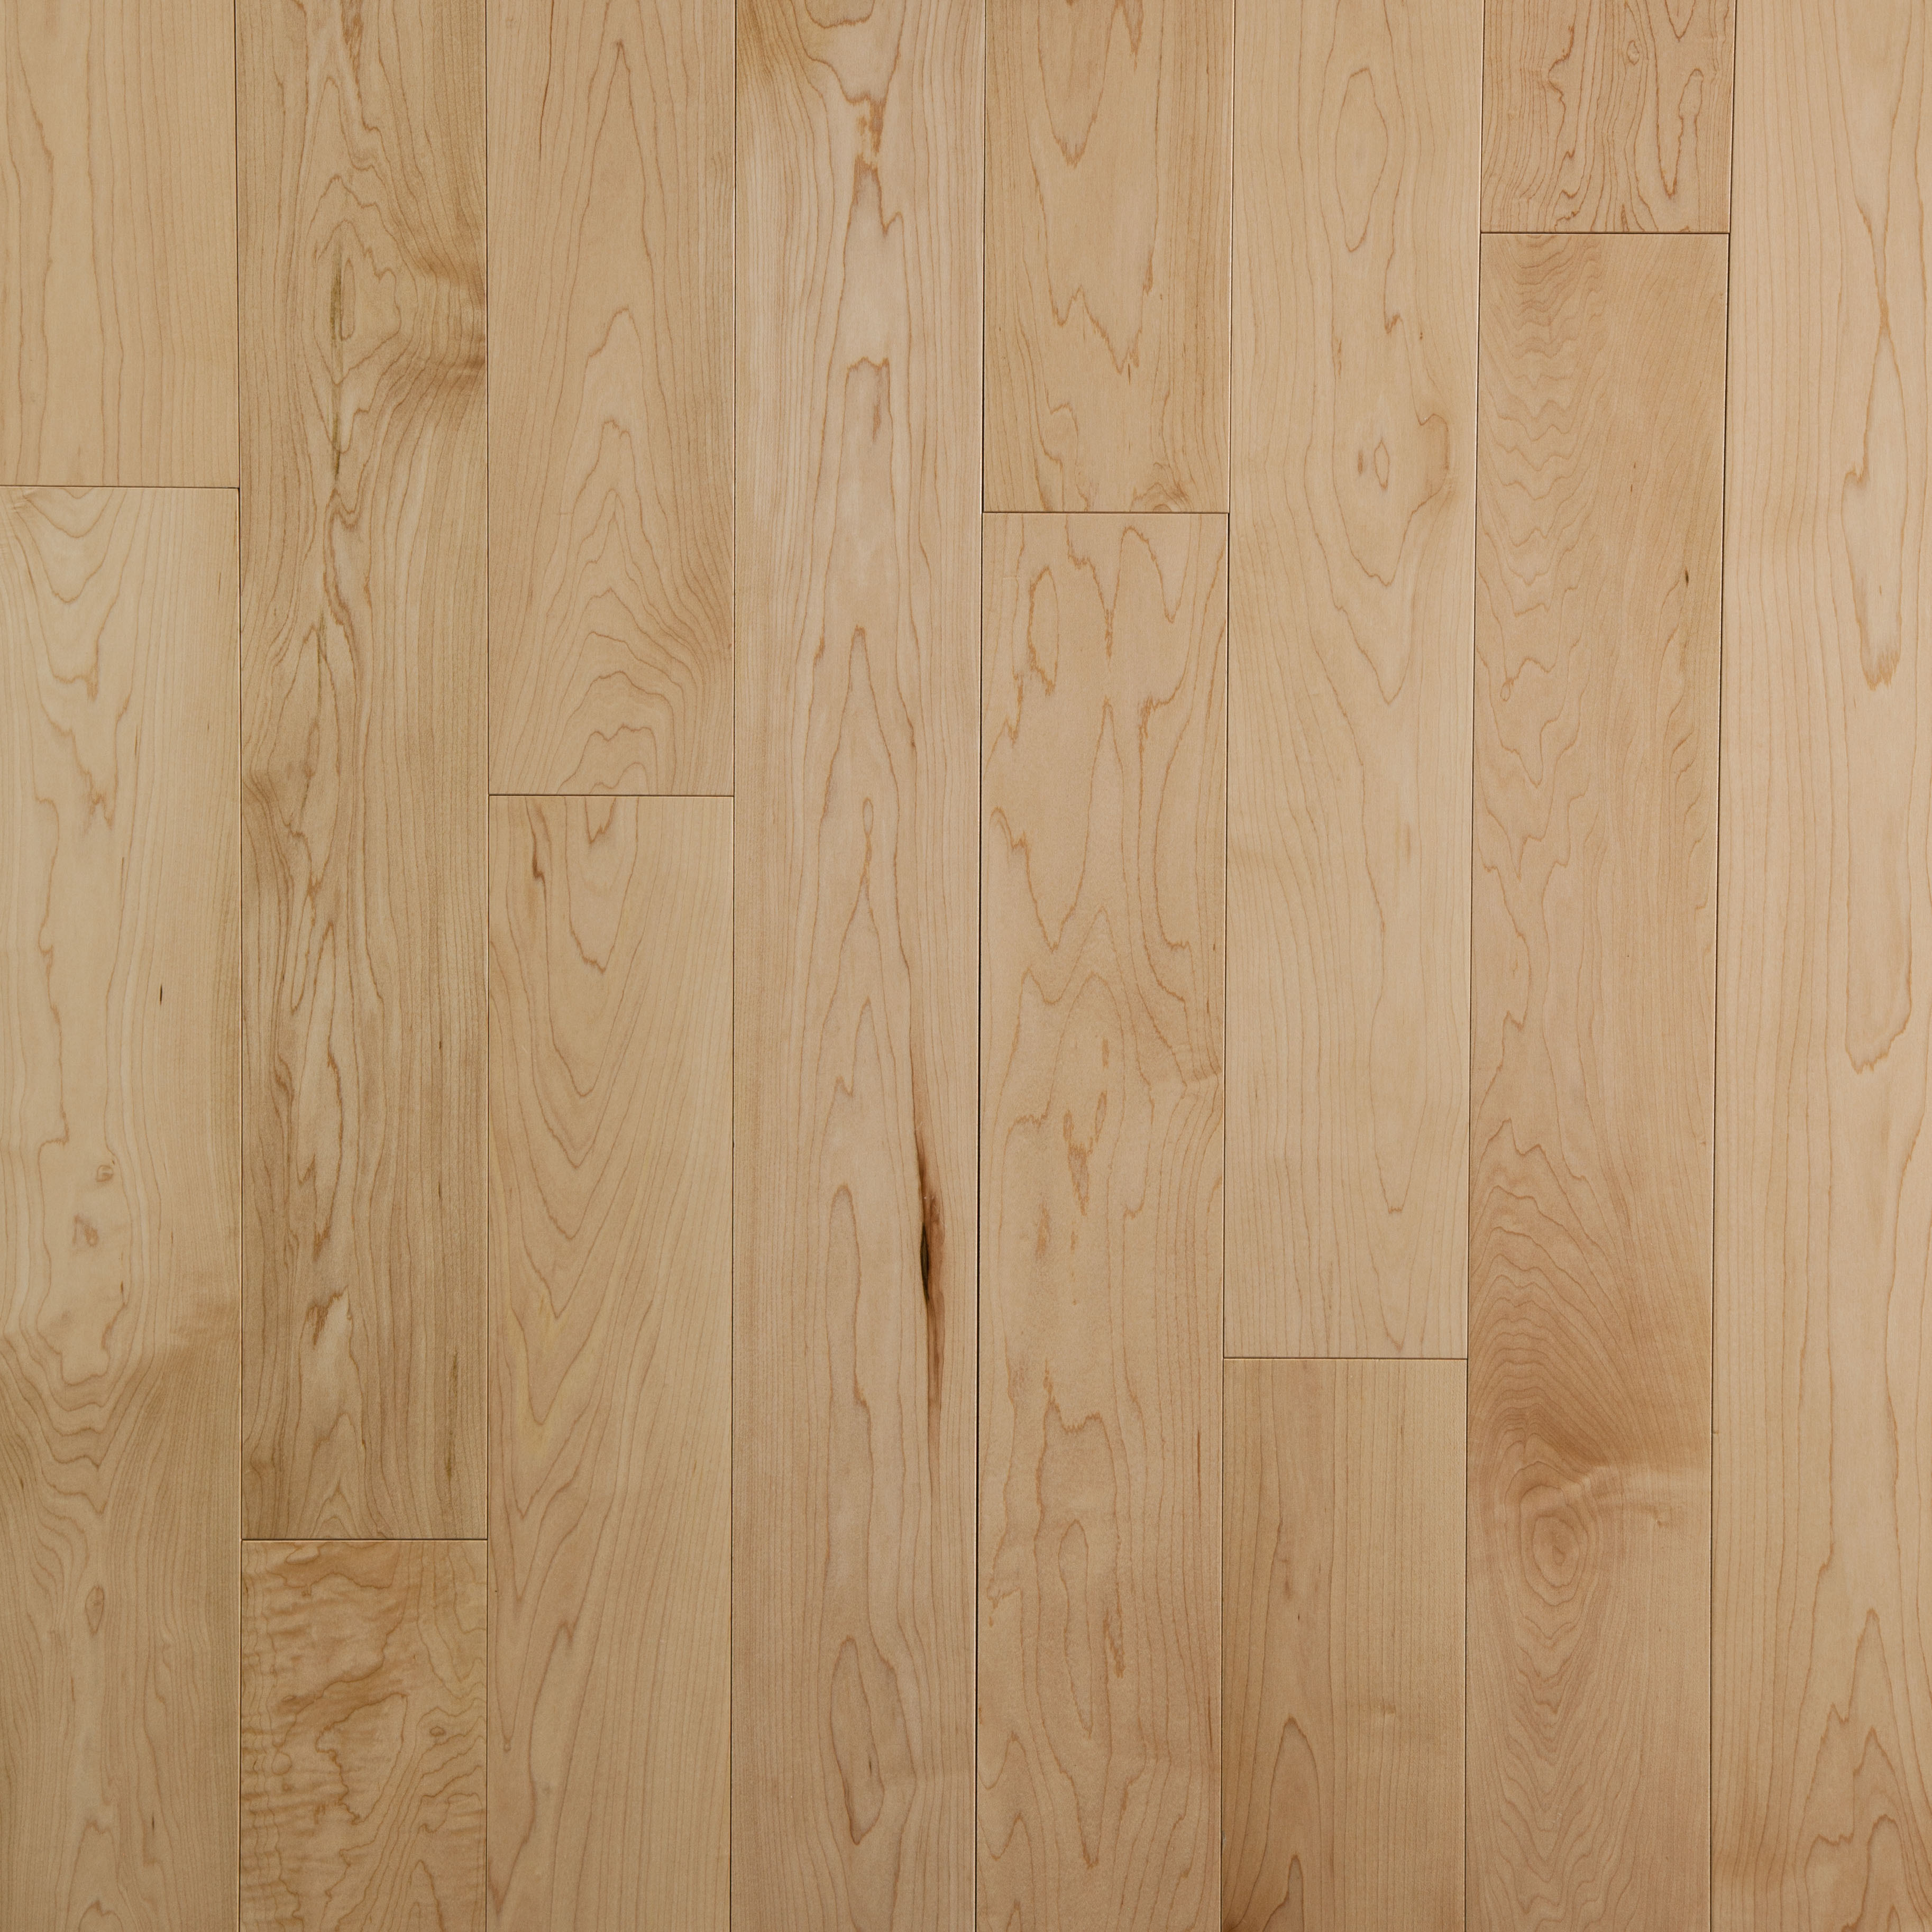 10 Popular Hardwood Floor Refinishing Detroit 2023 free download hardwood floor refinishing detroit of hardwood lumber phoenix hardwood lumber intended for phoenix hardwood lumber photos